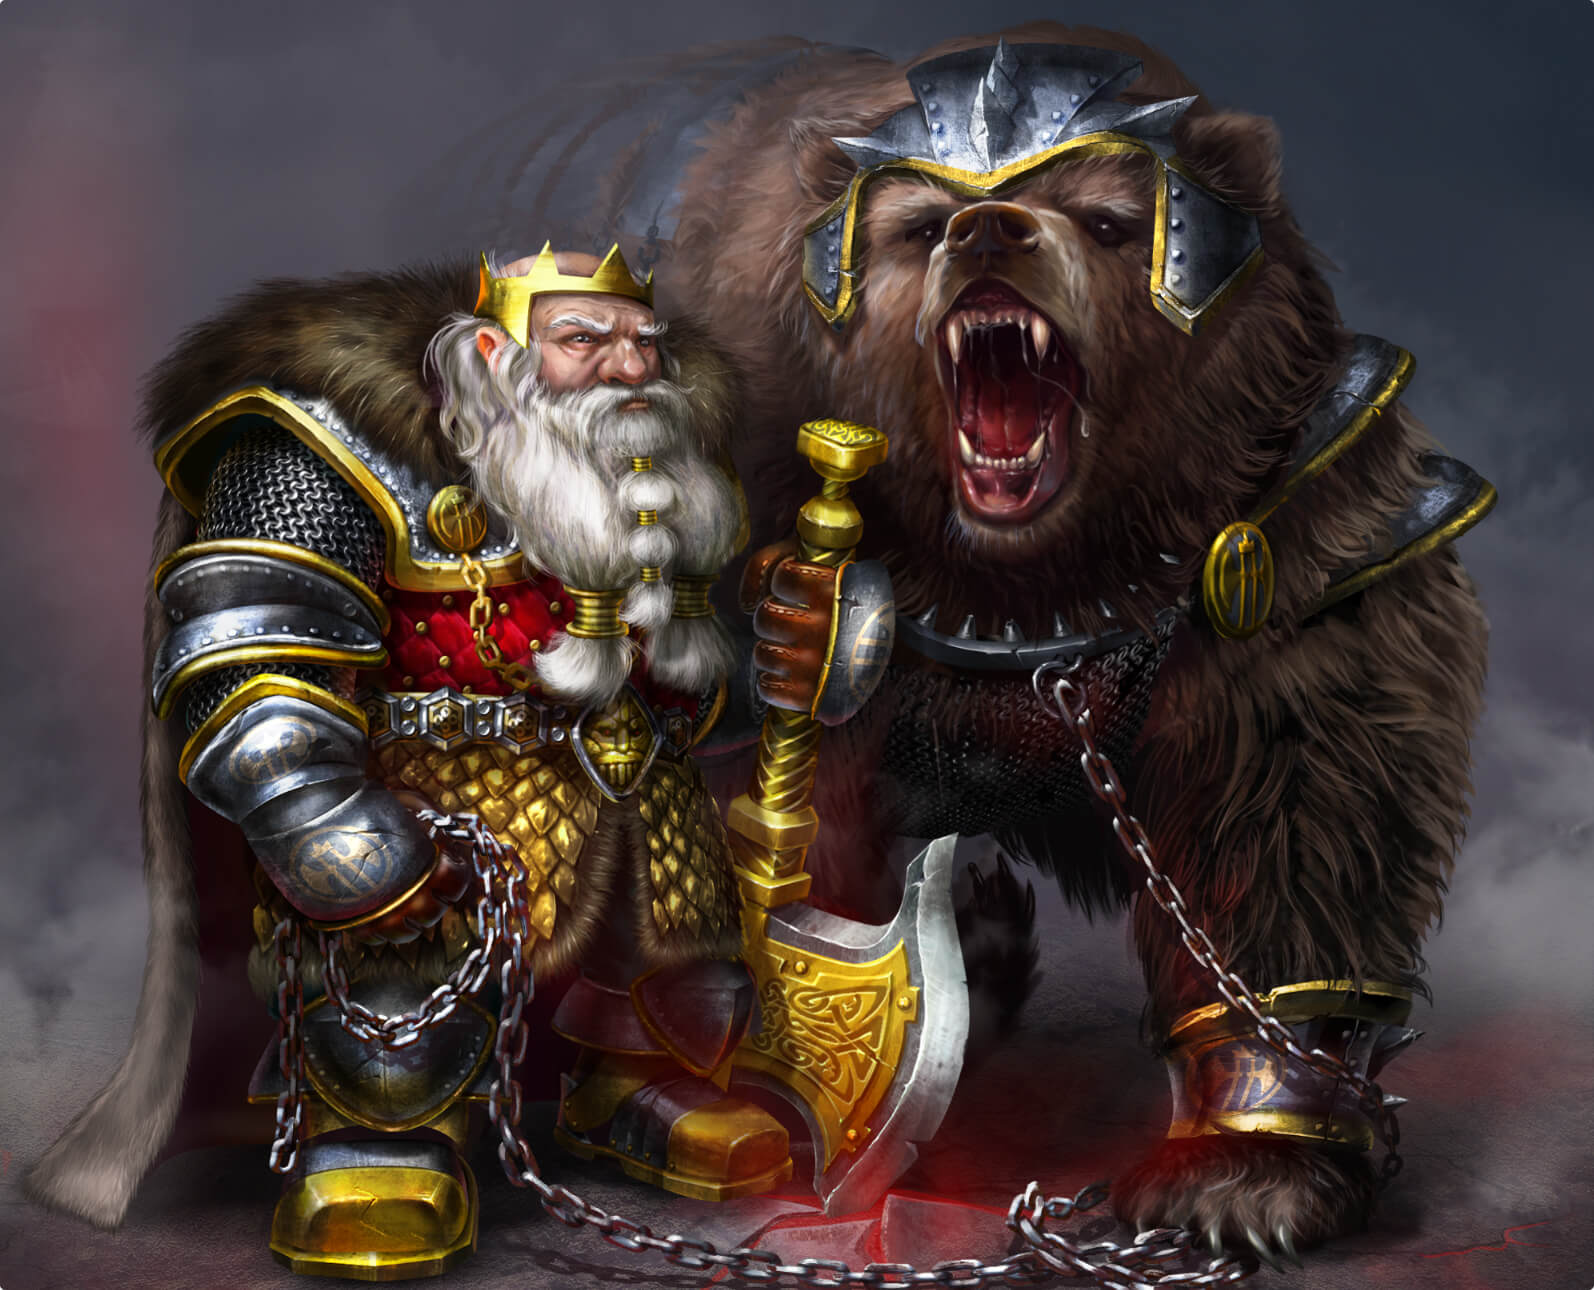 King of Dwarfs character concept art and illustration design